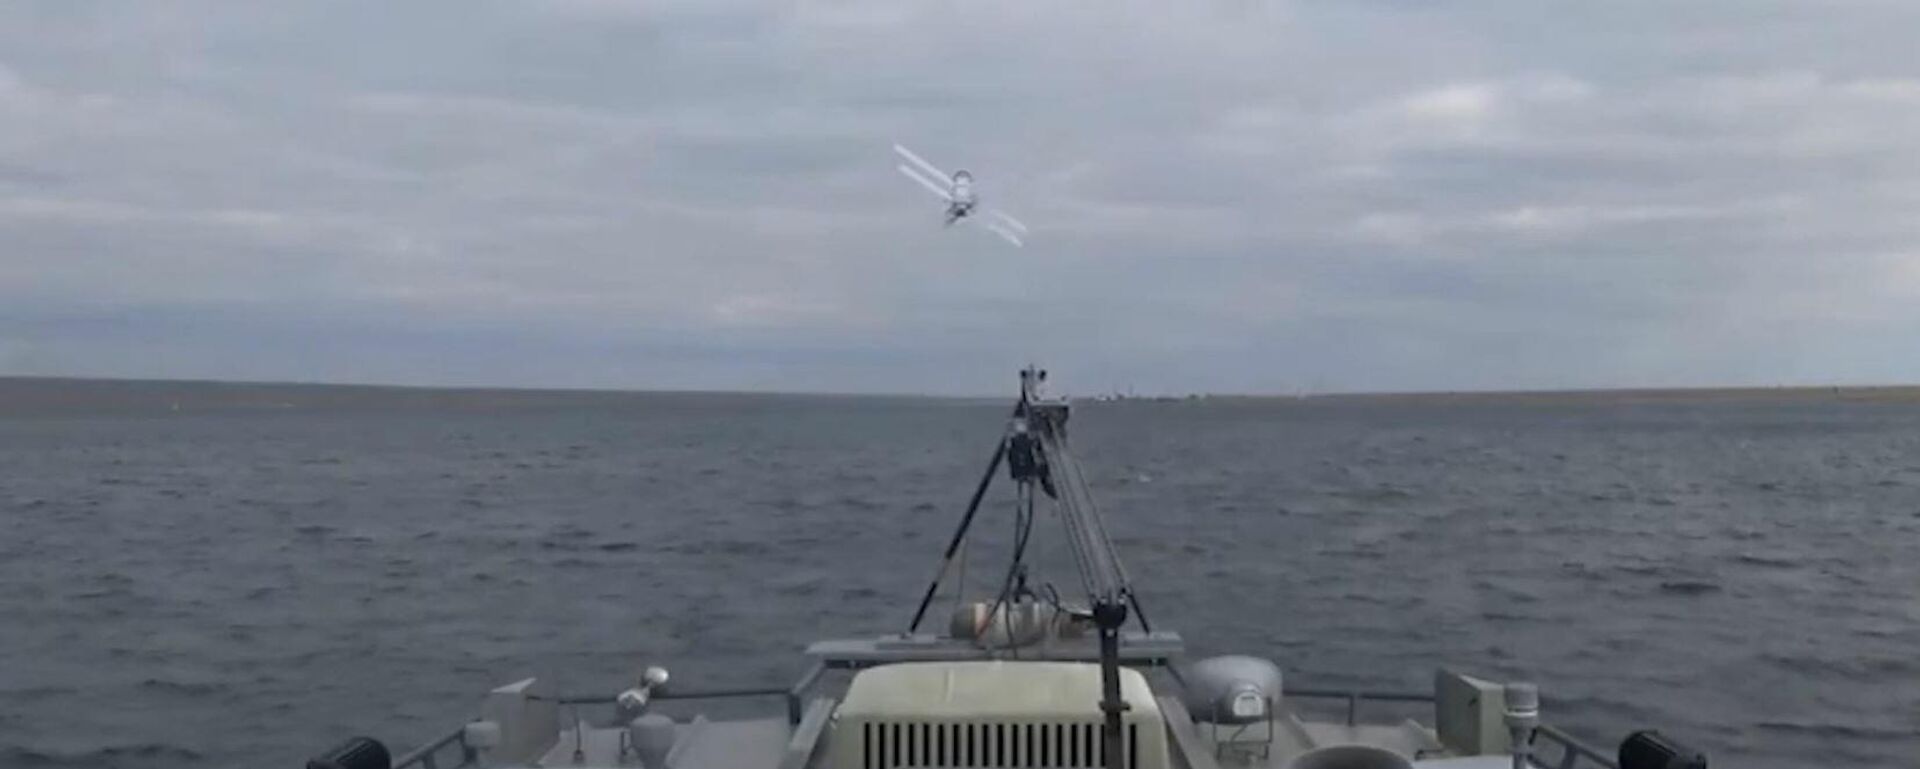 Ponen a prueba a un dron kamikaze ruso desde una lancha | Video - Sputnik Mundo, 1920, 13.12.2021